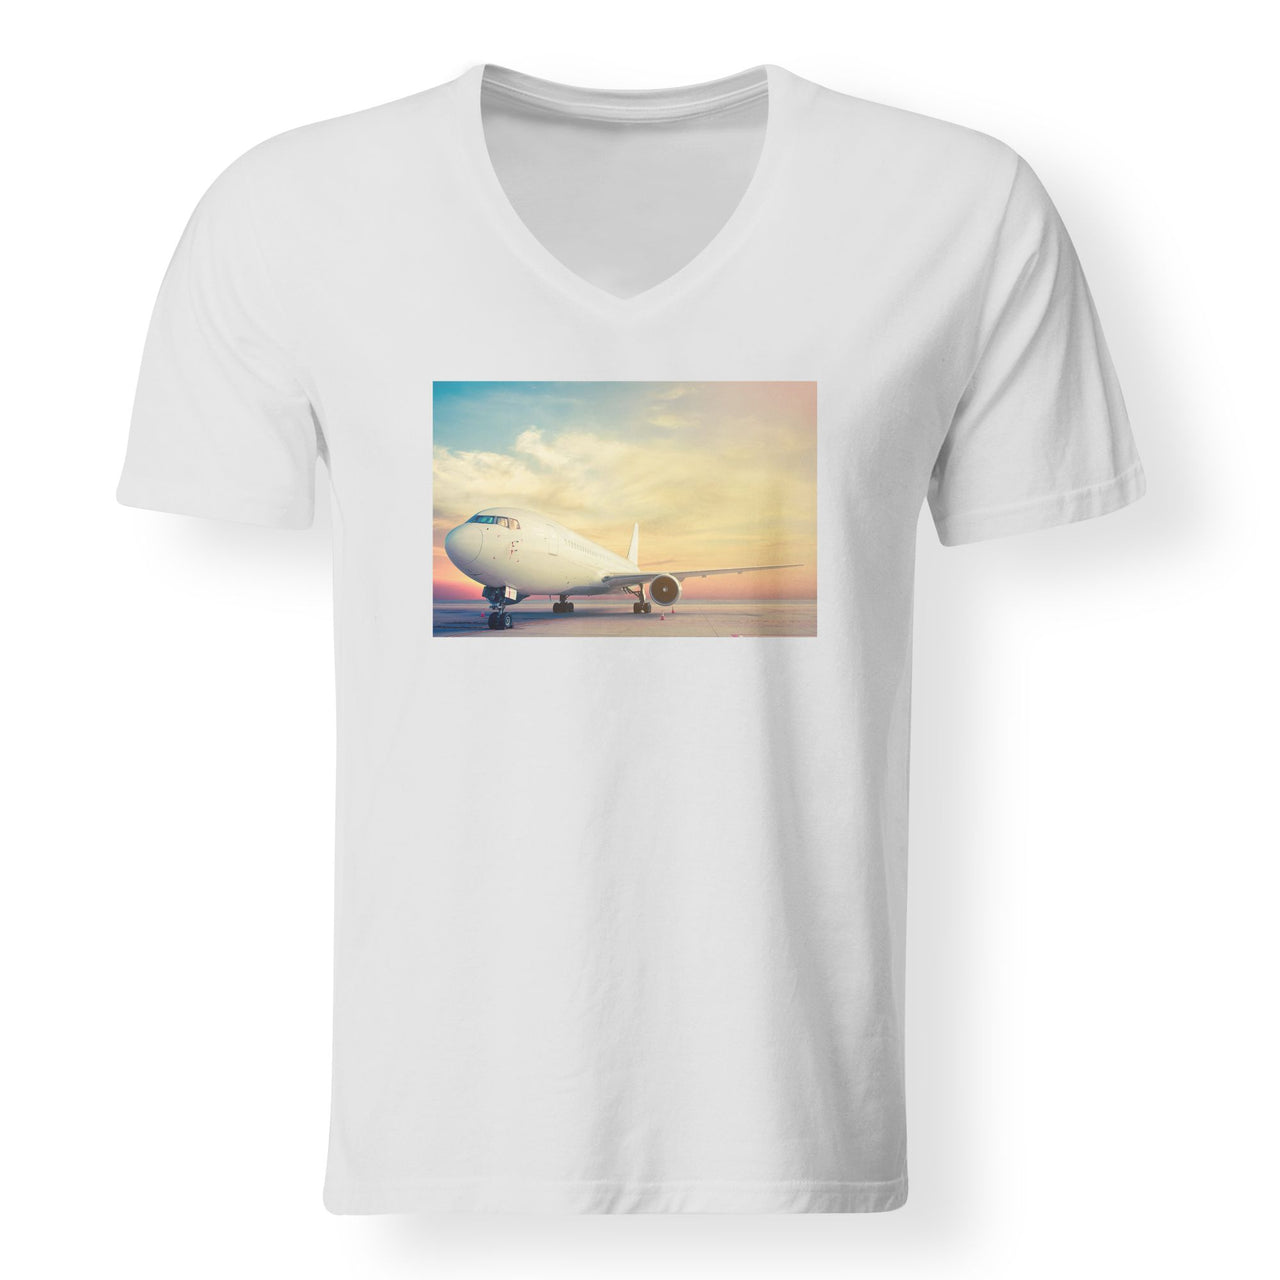 Parked Aircraft During Sunset Designed V-Neck T-Shirts